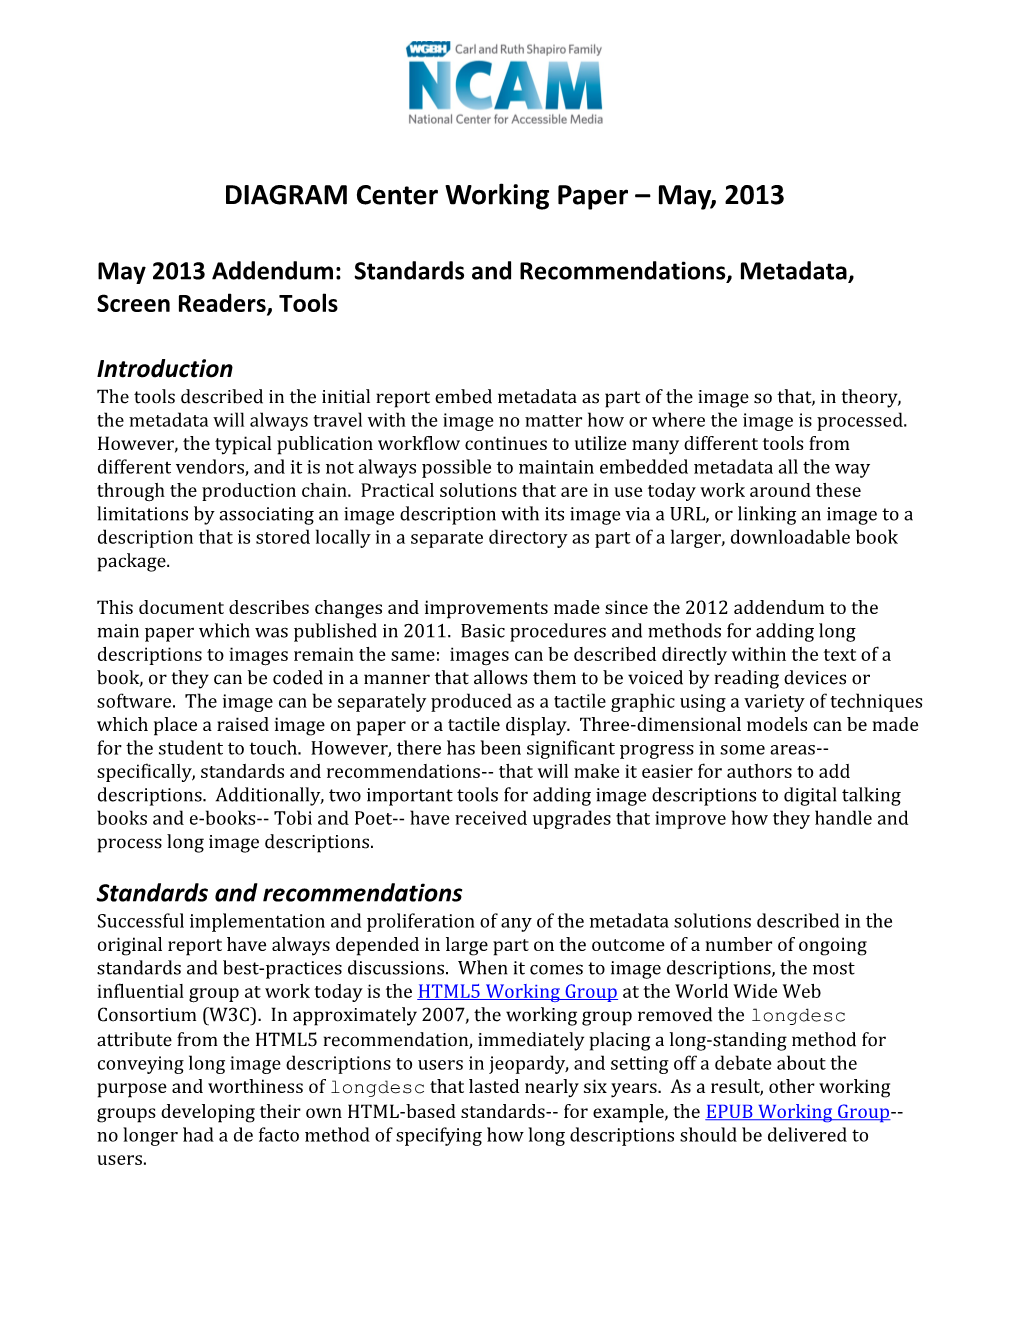 DIAGRAM CENTER WORKING PAPER Image Metadata Addendum, May, 2013